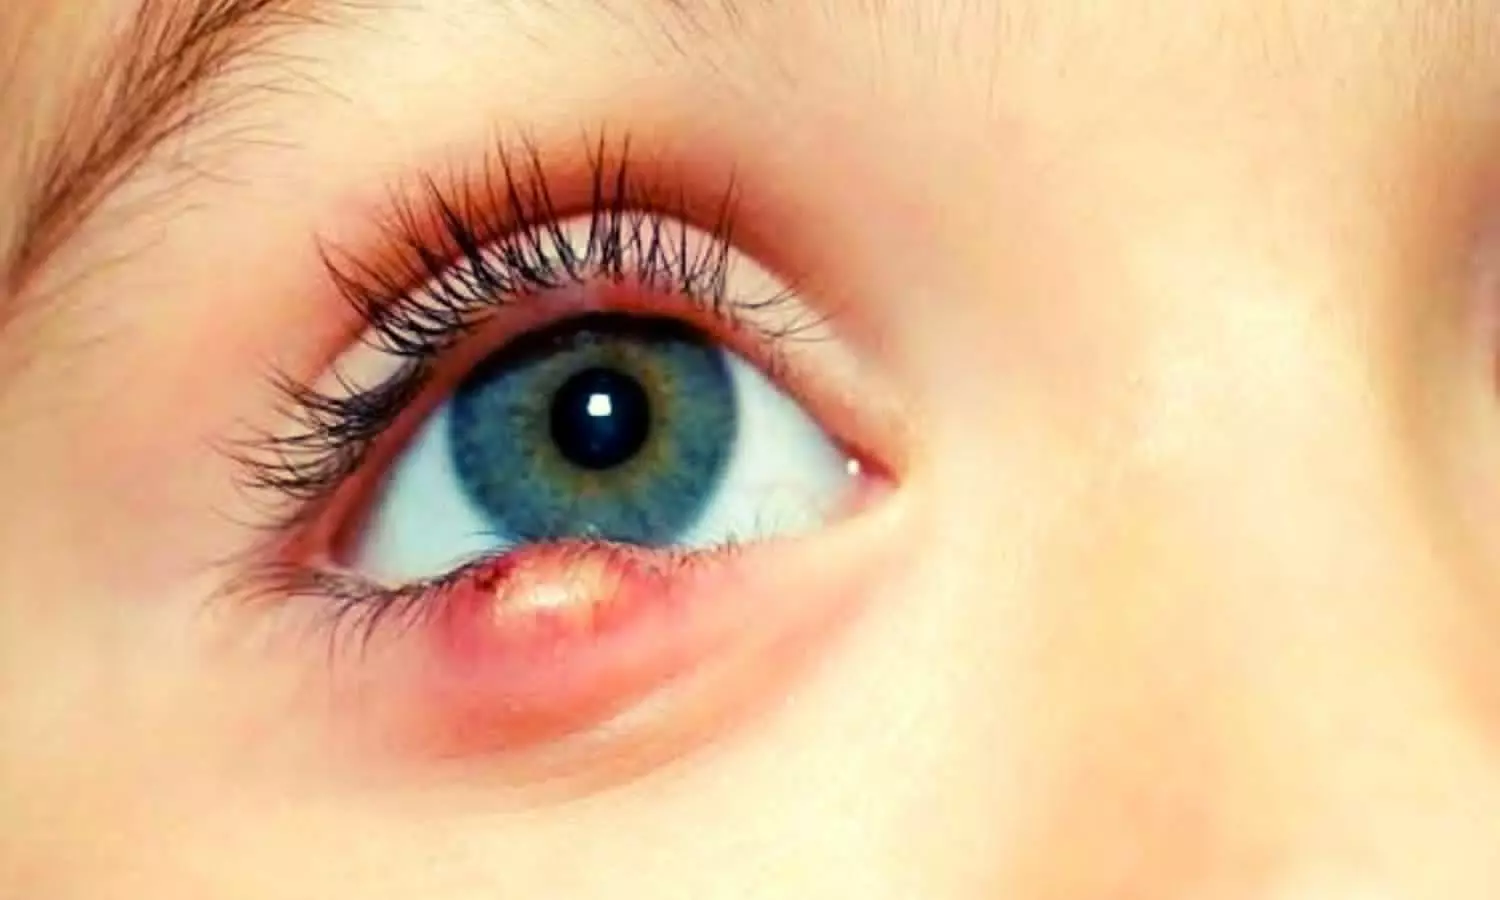 Bilni in Eyes  Treatment